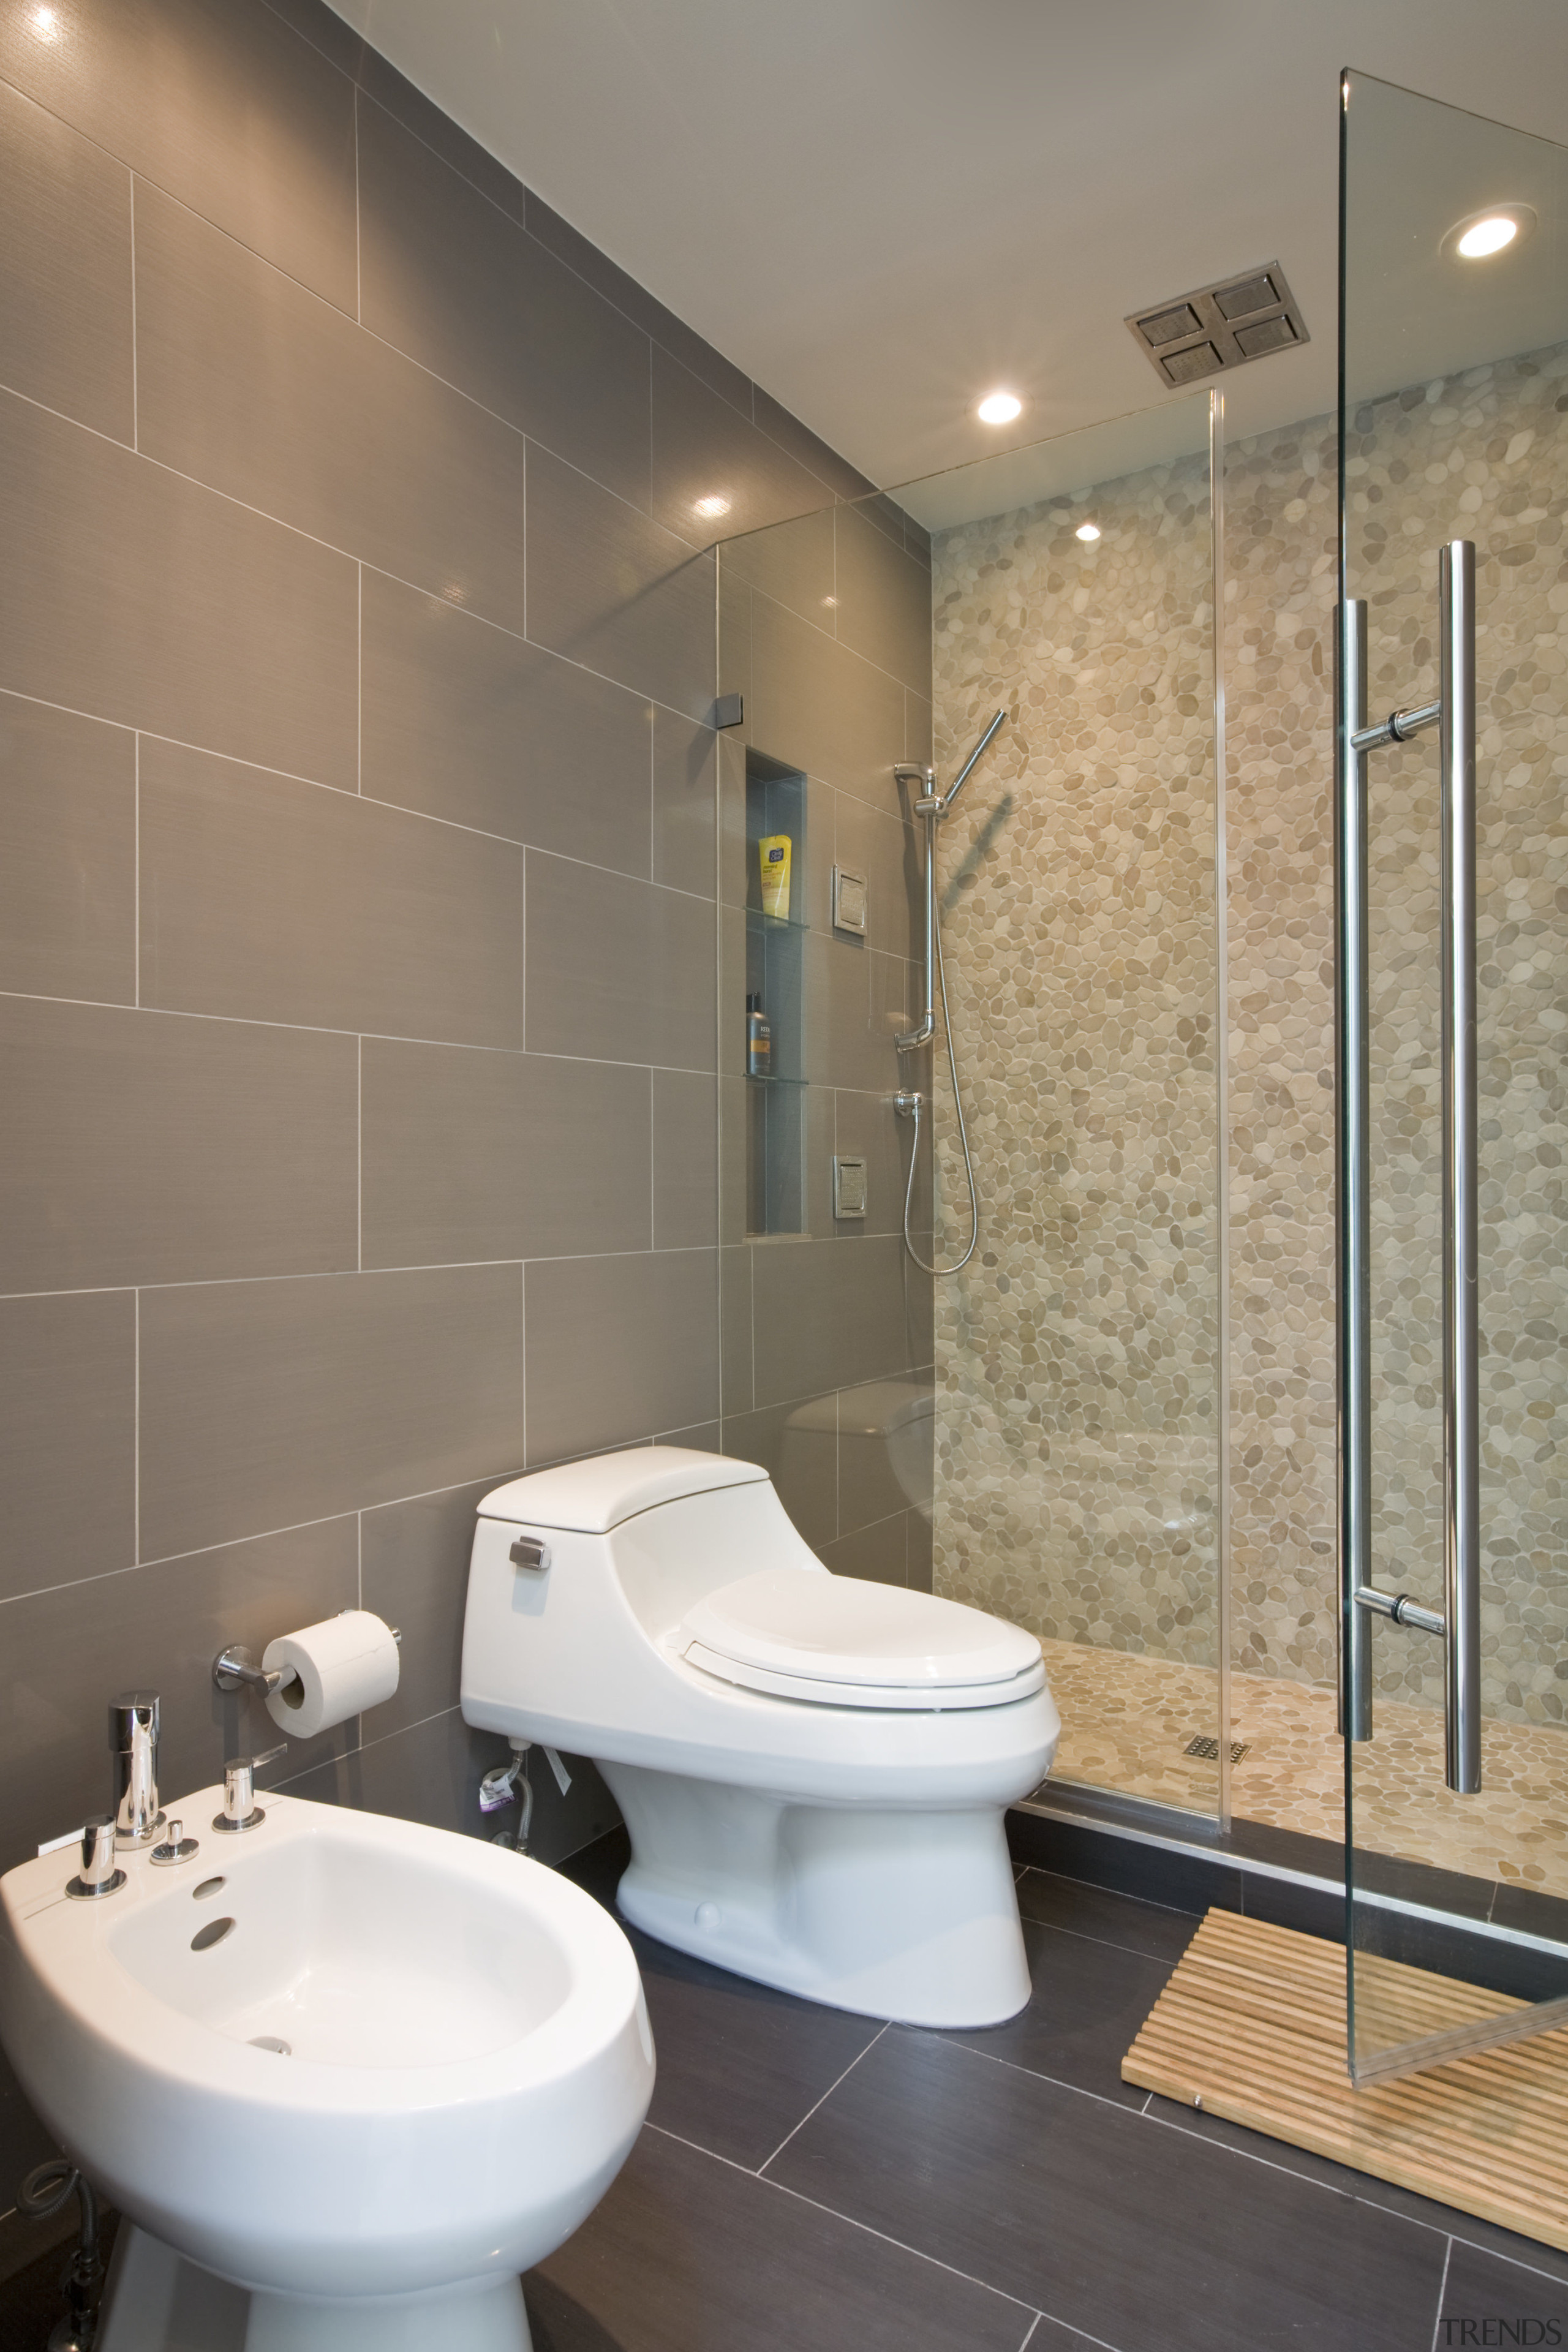 Master bathroom in contemporary townhouse renovation bathroom, floor, interior design, plumbing fixture, room, tile, toilet, toilet seat, wall, gray, brown